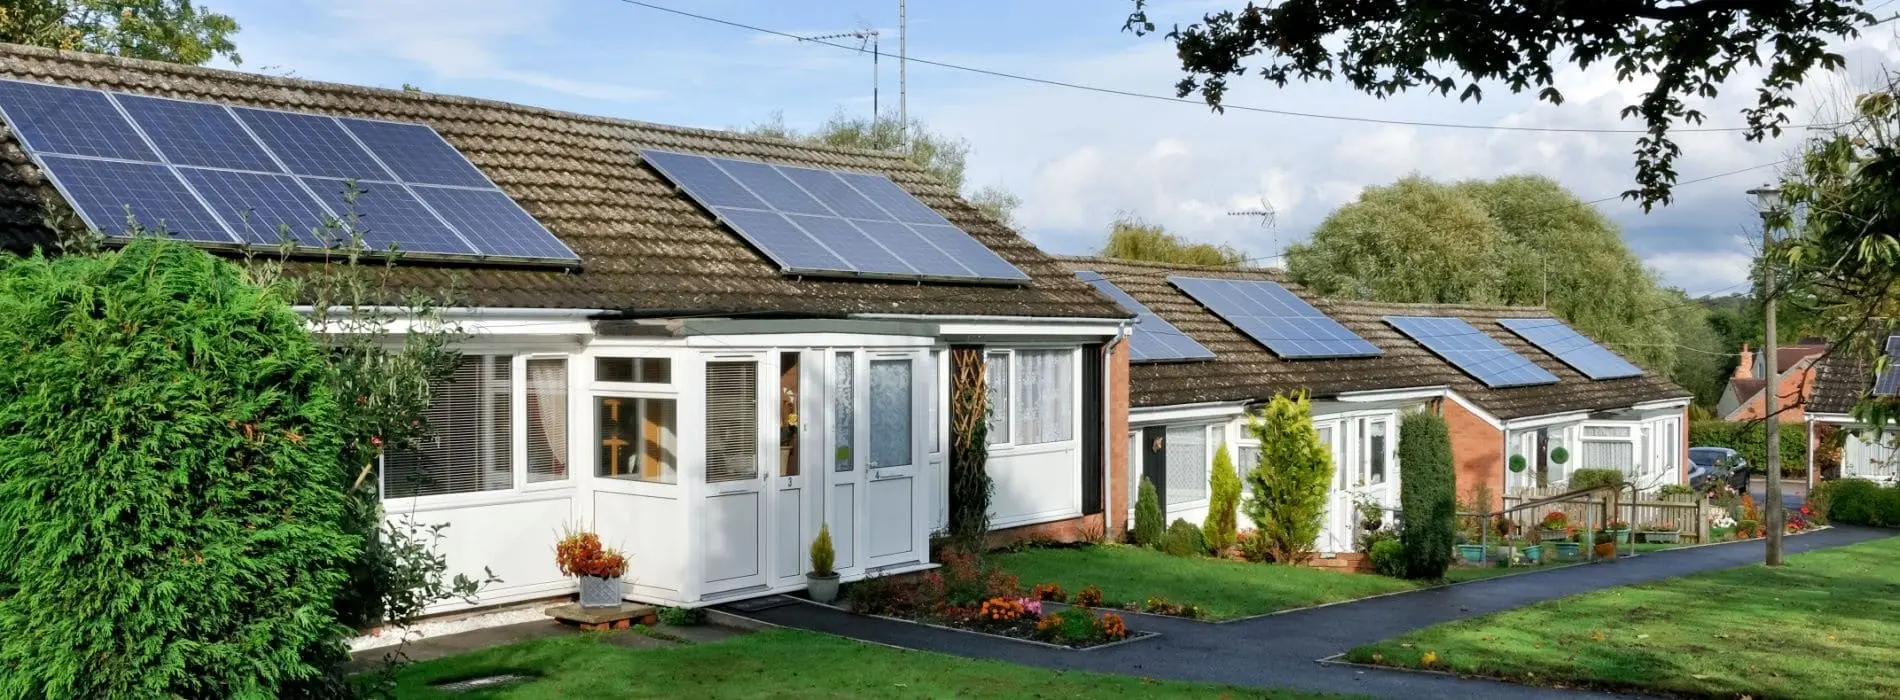 The Evolution of Solar Power in Home Design